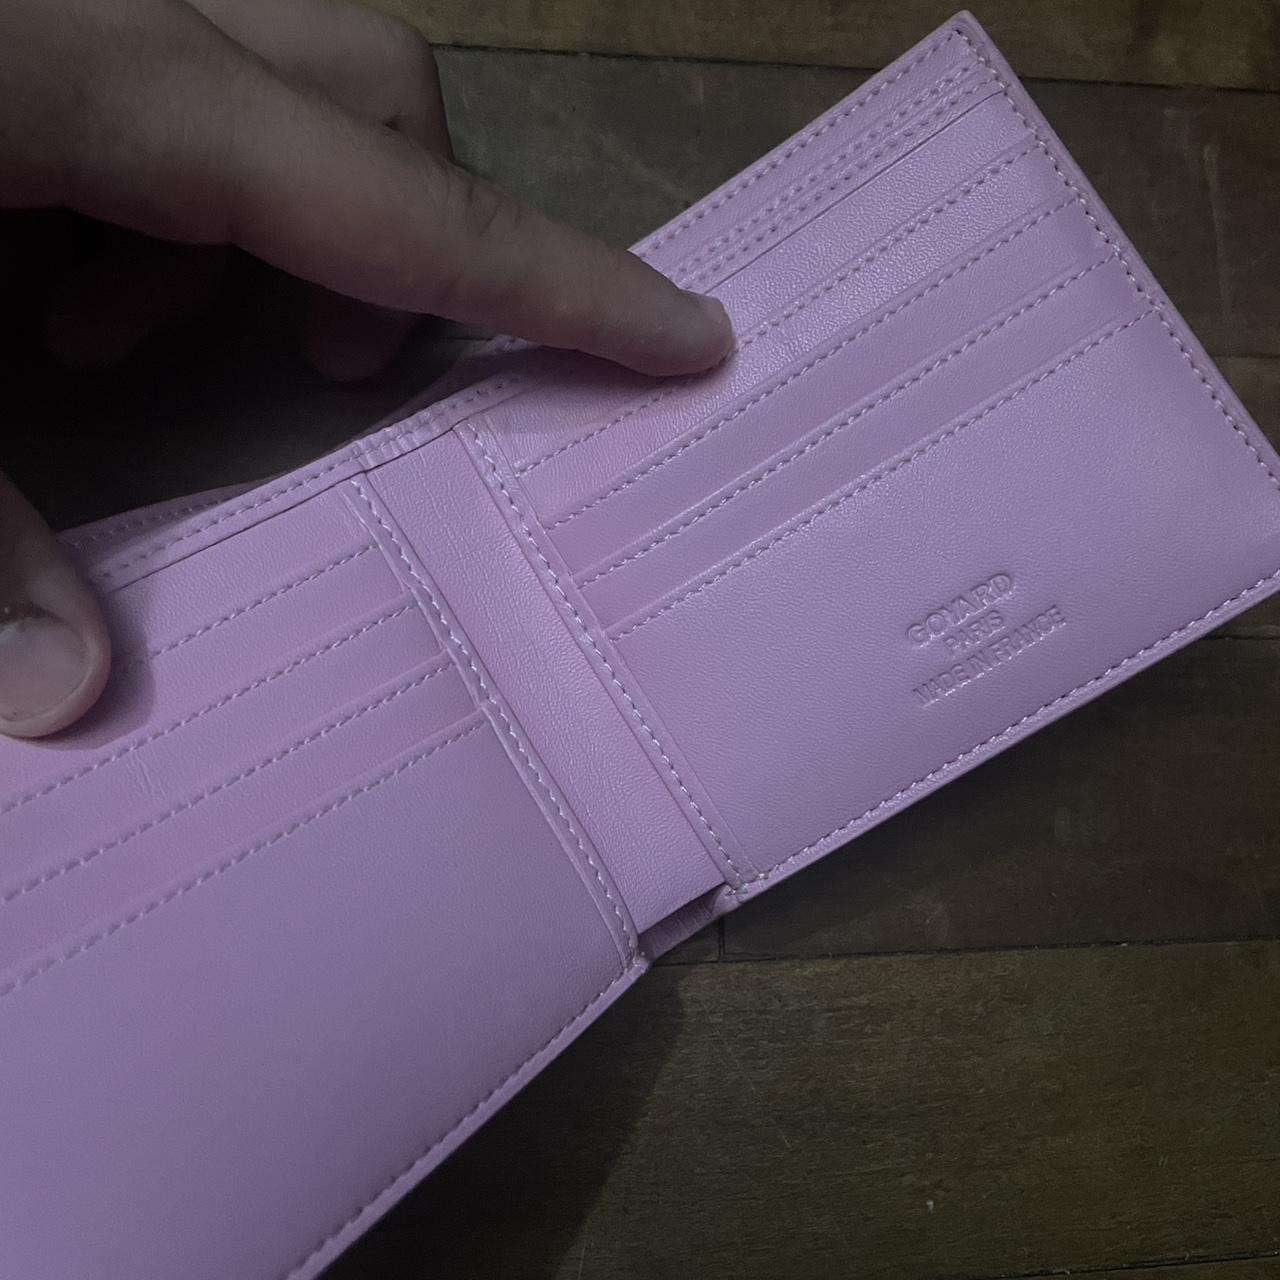 Pink goyard wallet #wallet #pink #goyard #fashion - Depop